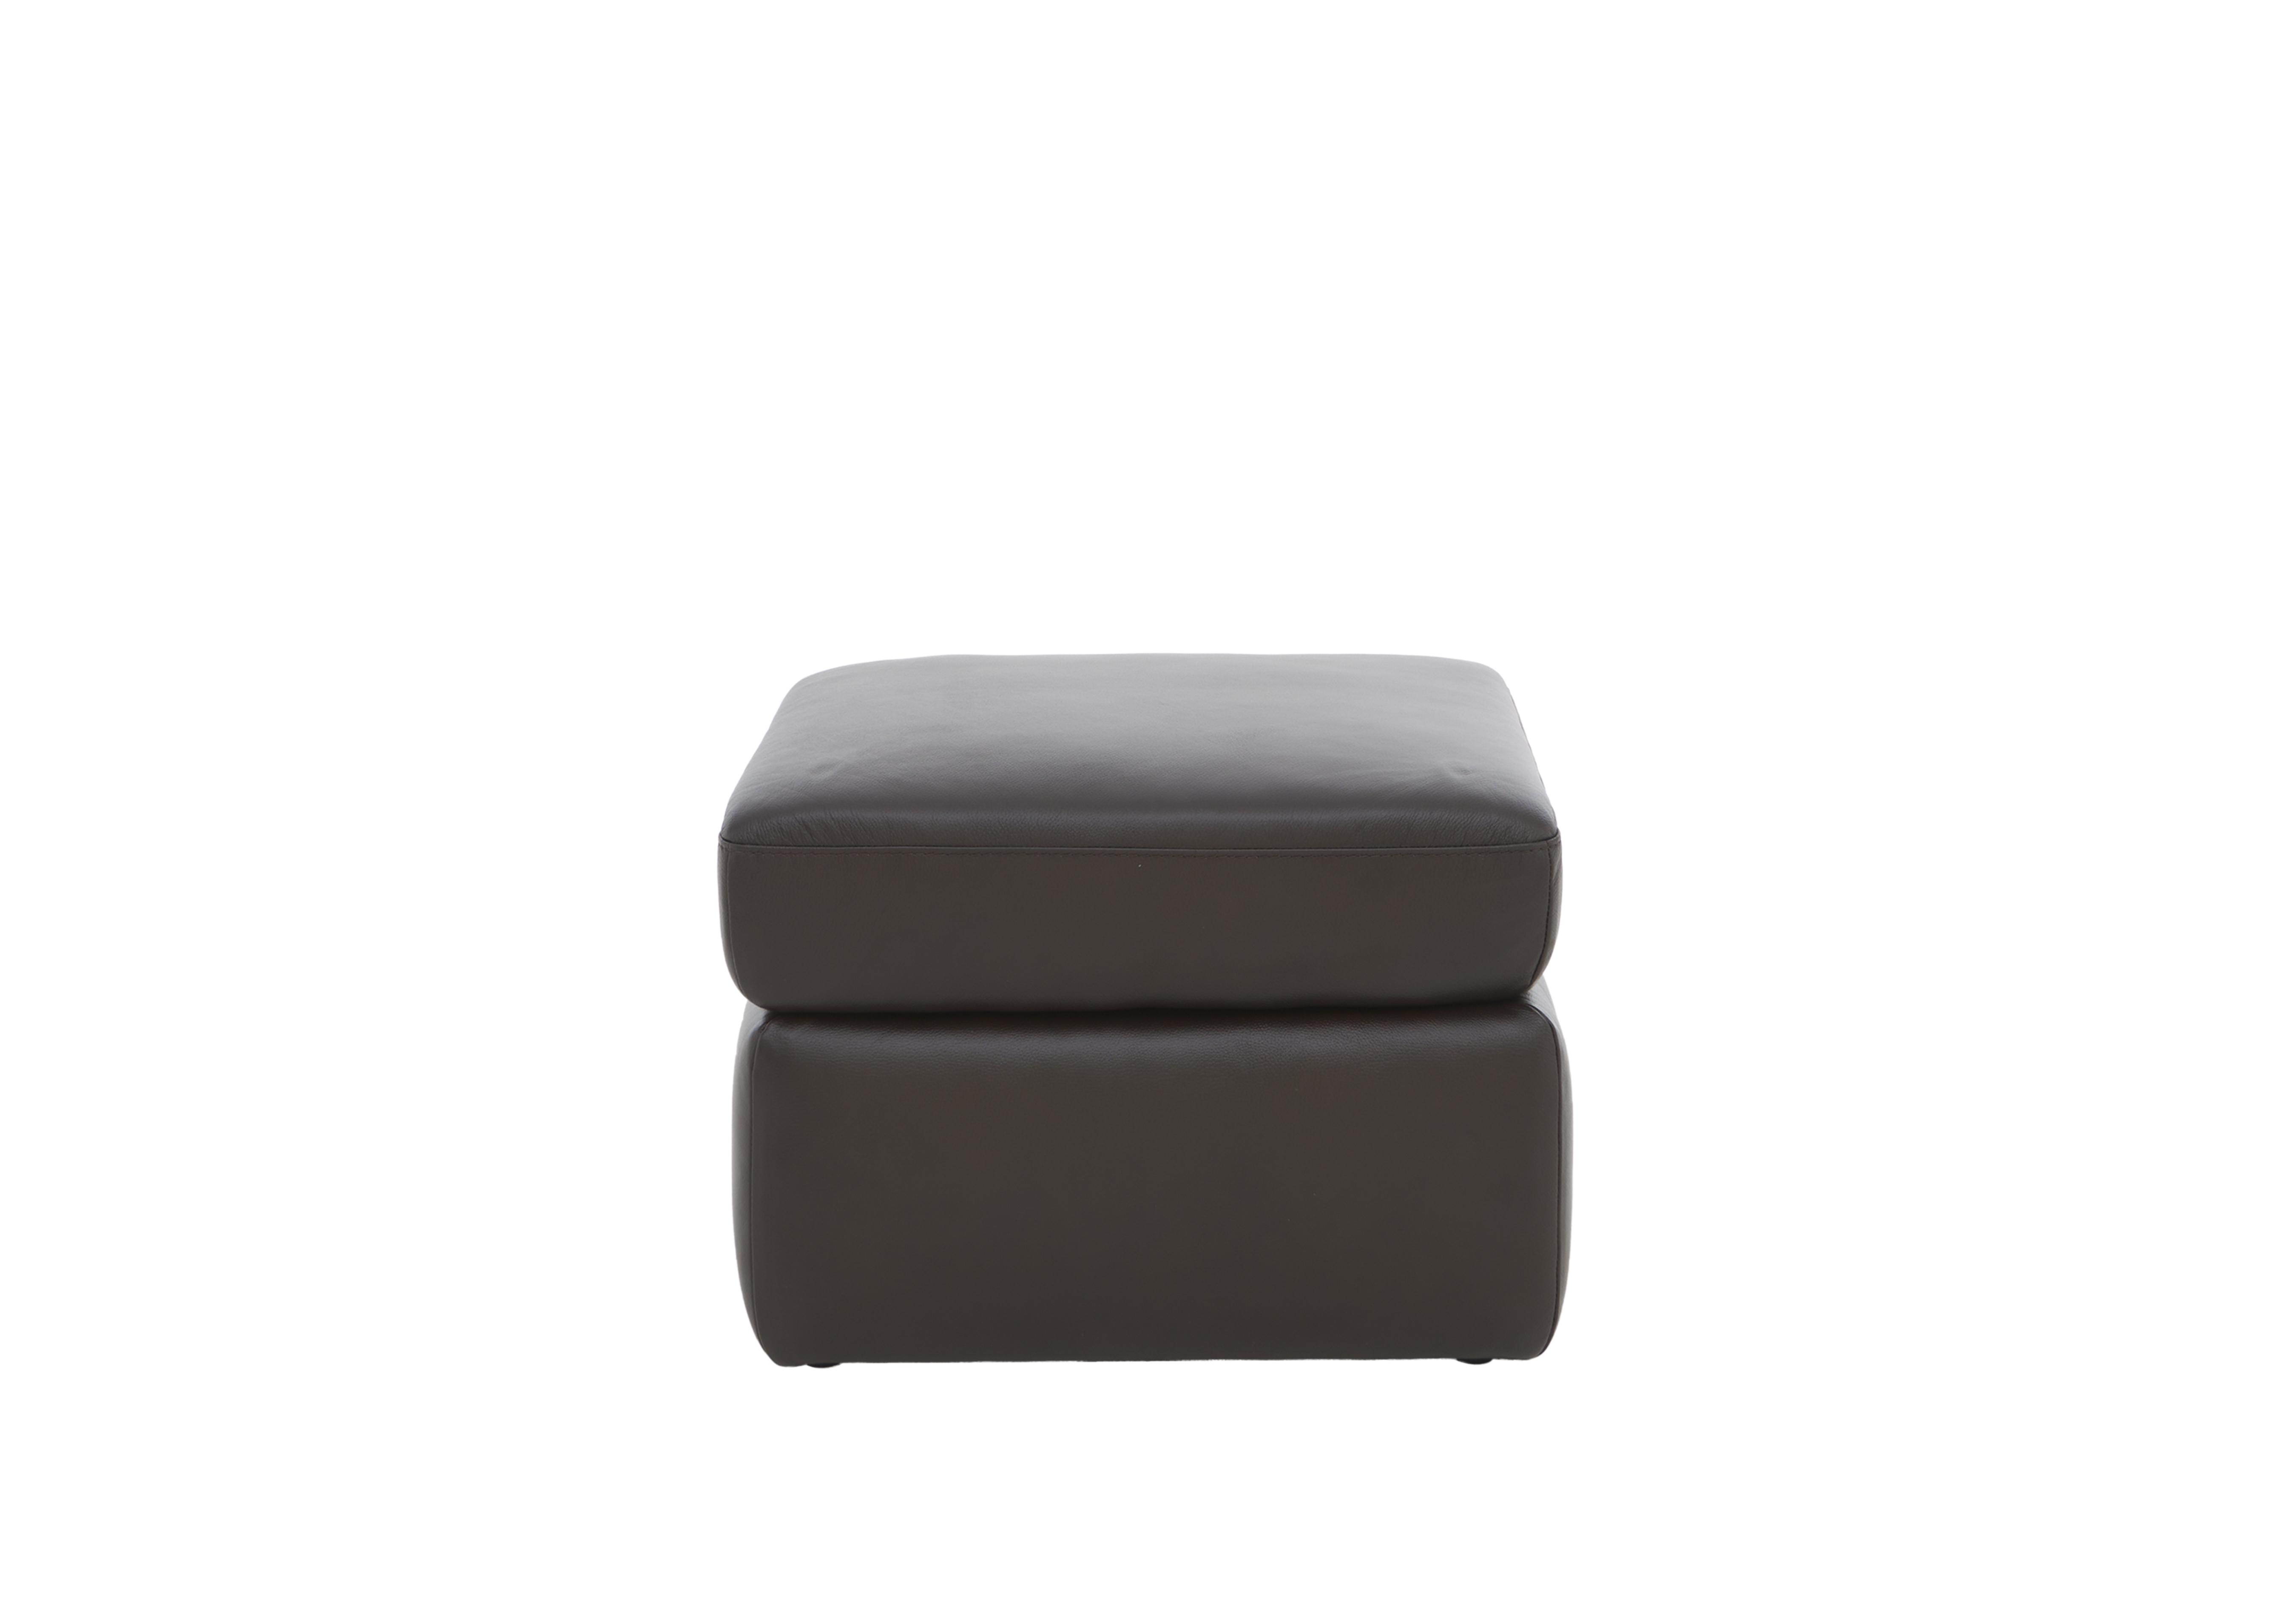 Utah Leather Storage Footstool in Espresso Lx-6413 on Furniture Village